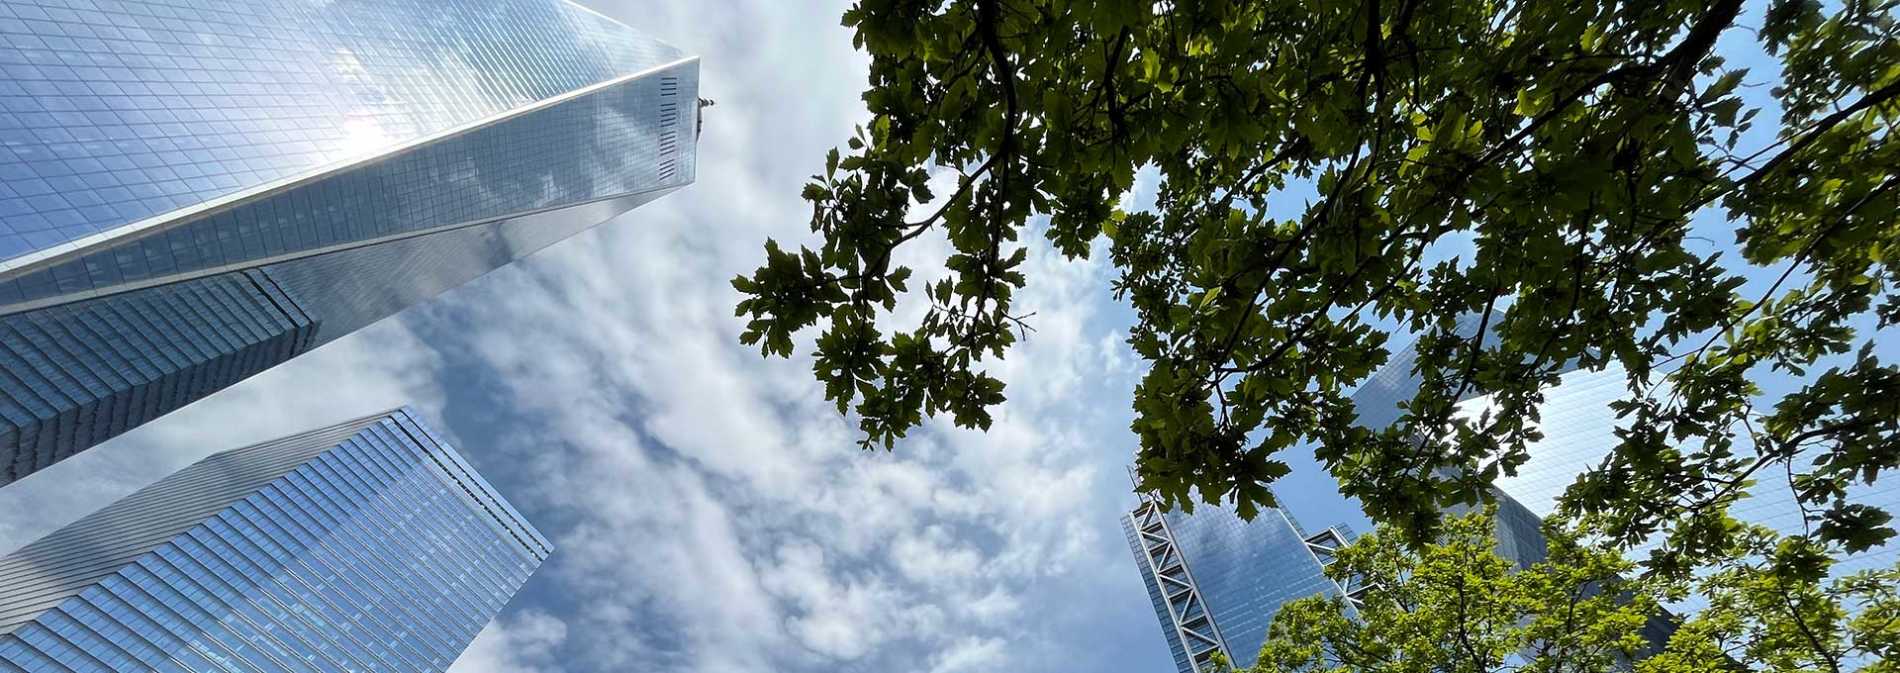 WTC and sky - New York City